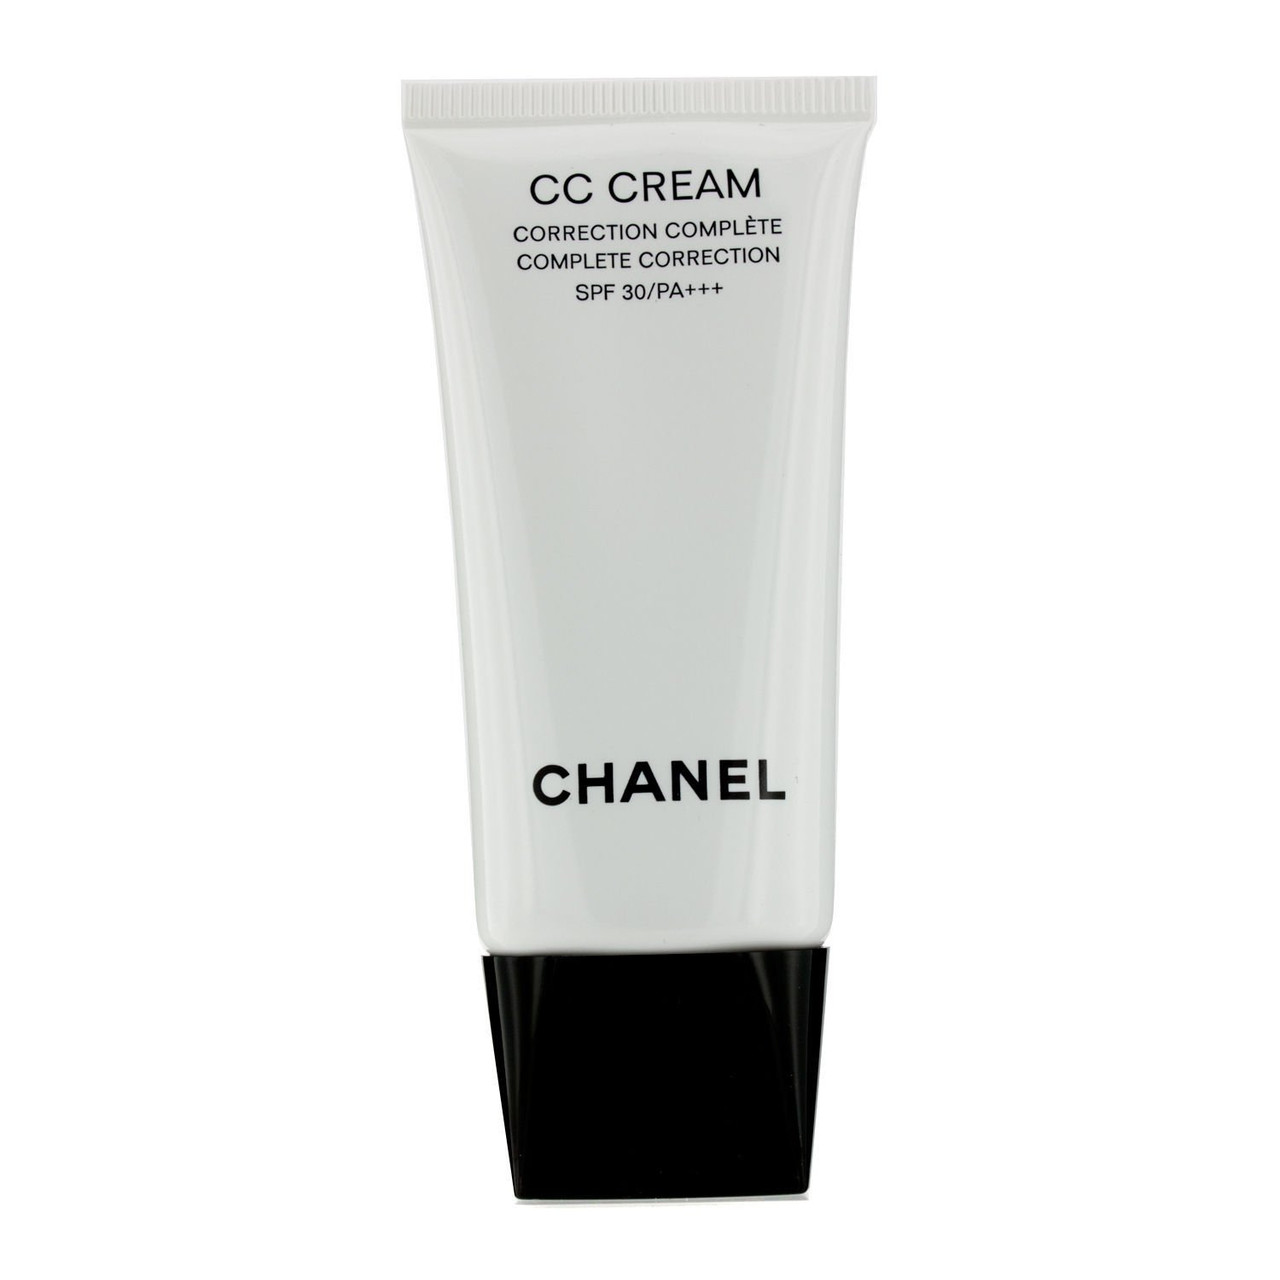 Chanel Cc Cream Complete Correction Spf 30 / Pa+++ # 32 Beige Rose